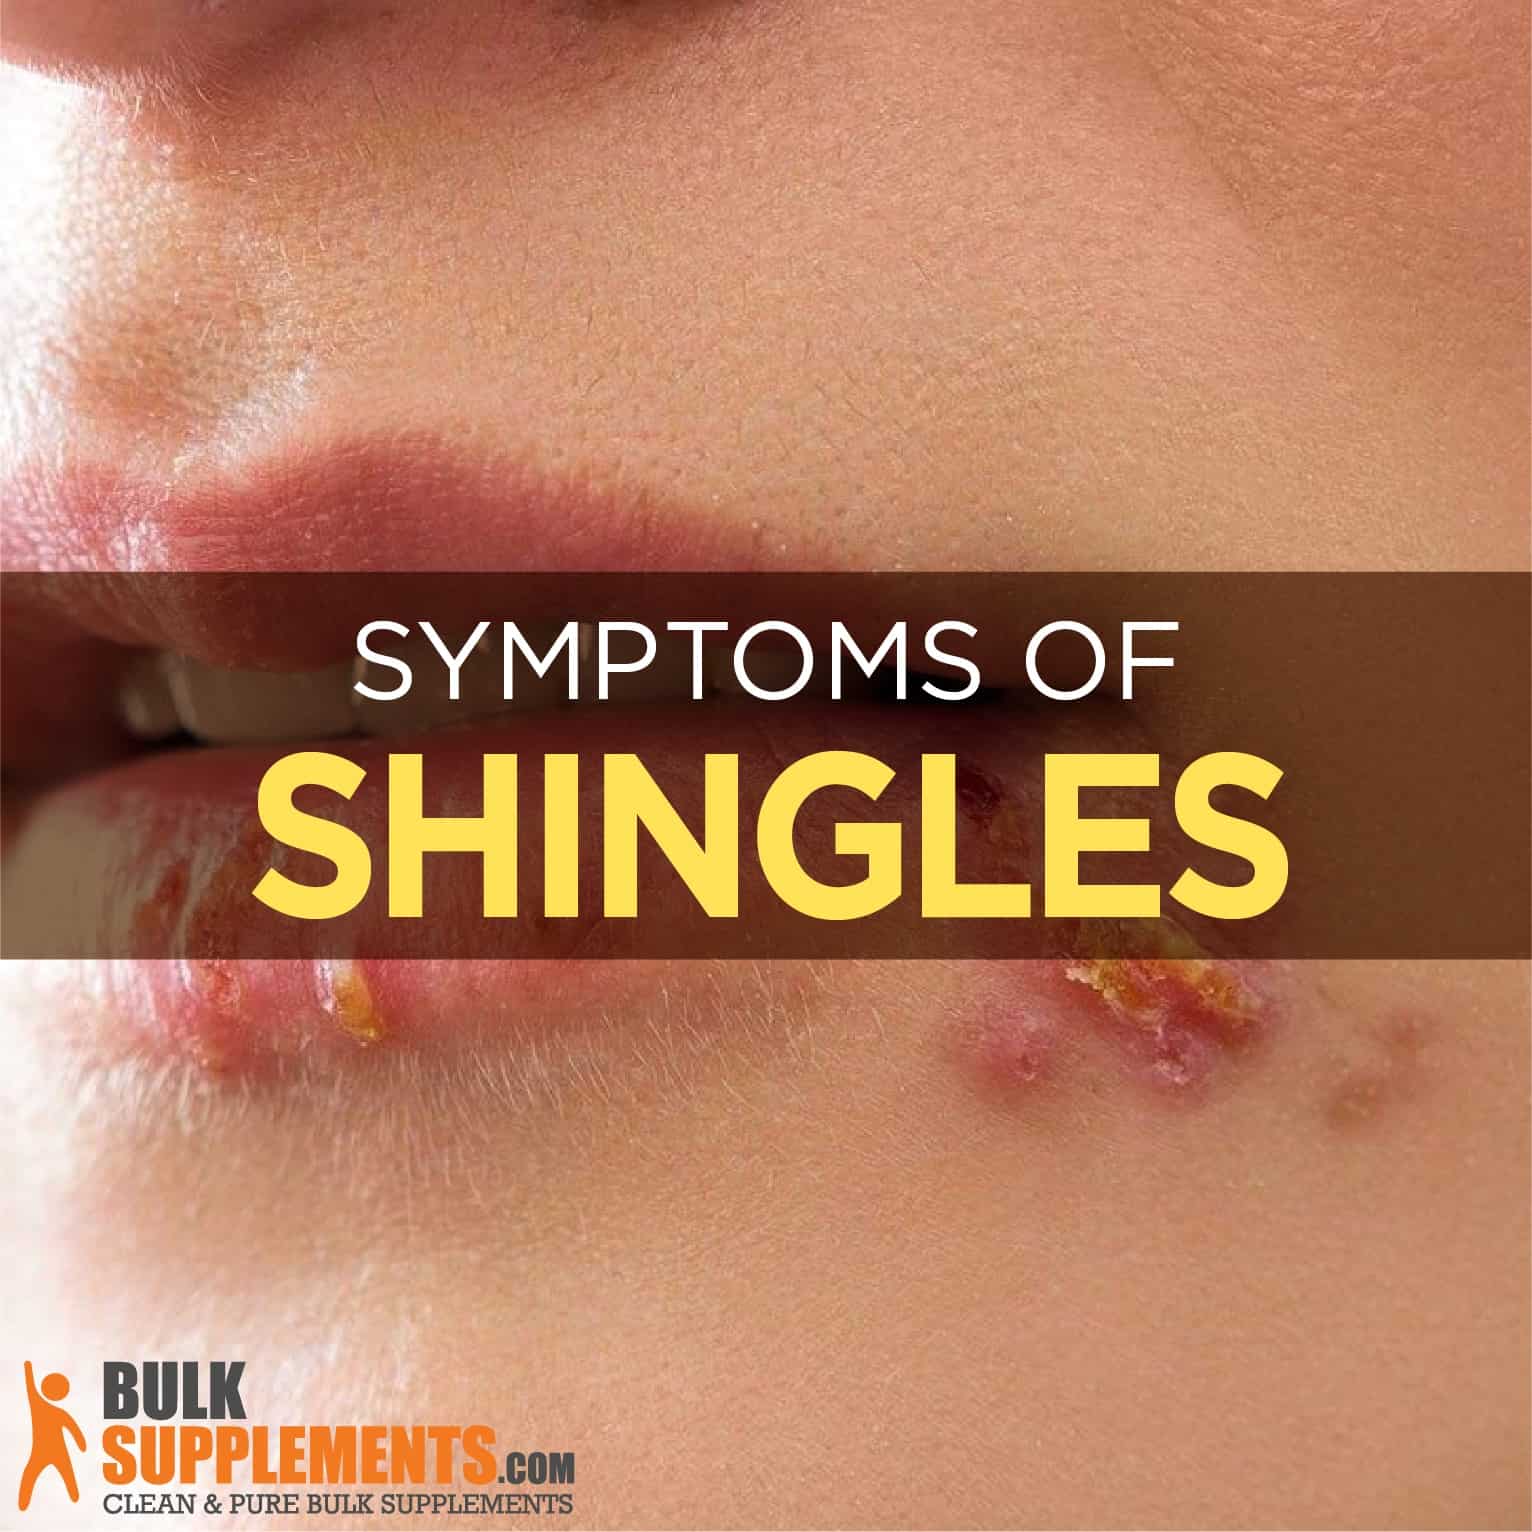 Shingles: Causes, Symptoms & Treatment by James Denlinger